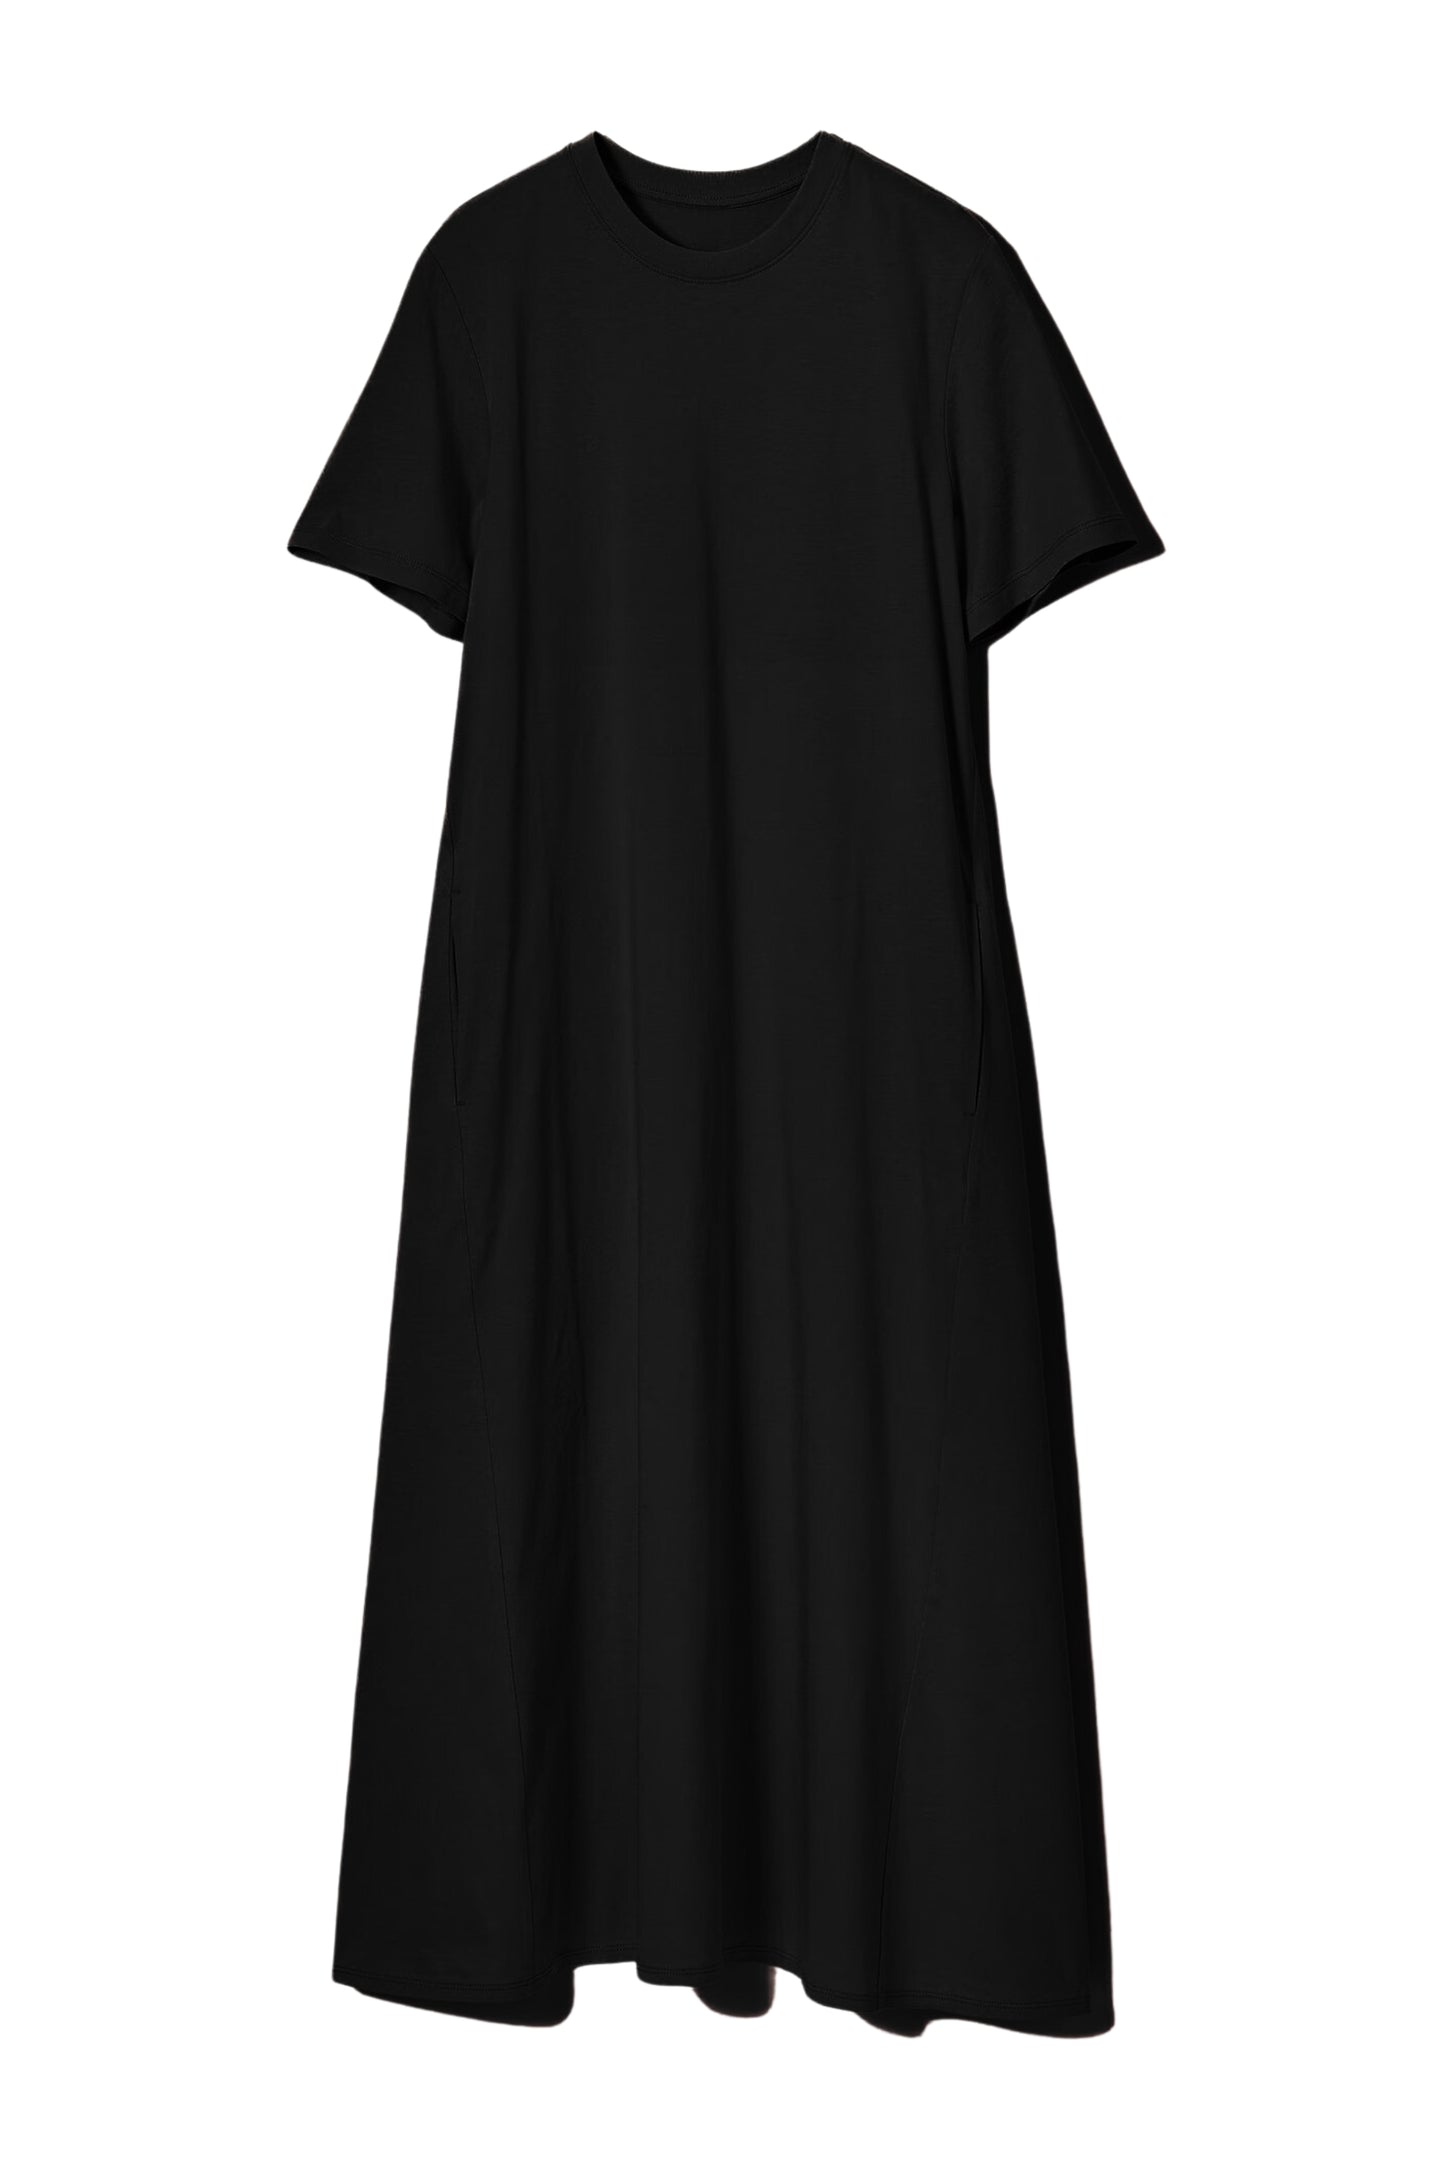 Women's Cotton Lycra Leisure Dress - Black